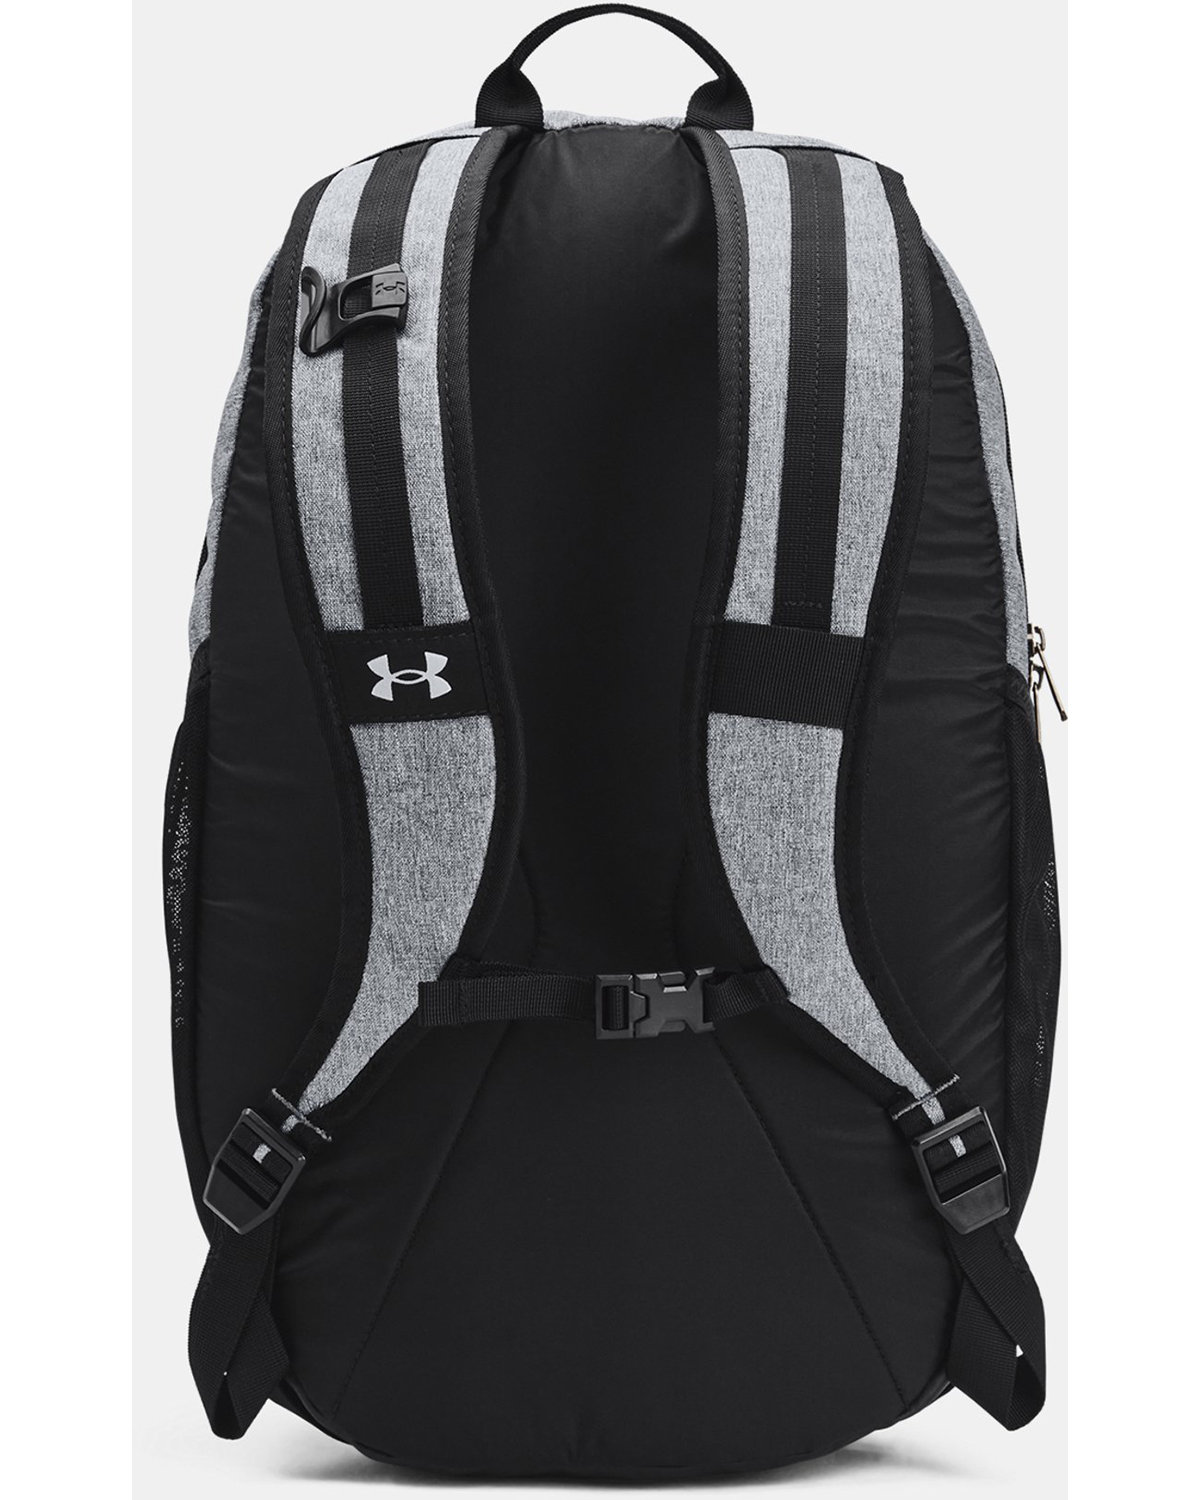 Under Armour Hustle Backpack Water Resistant Backpack Black 